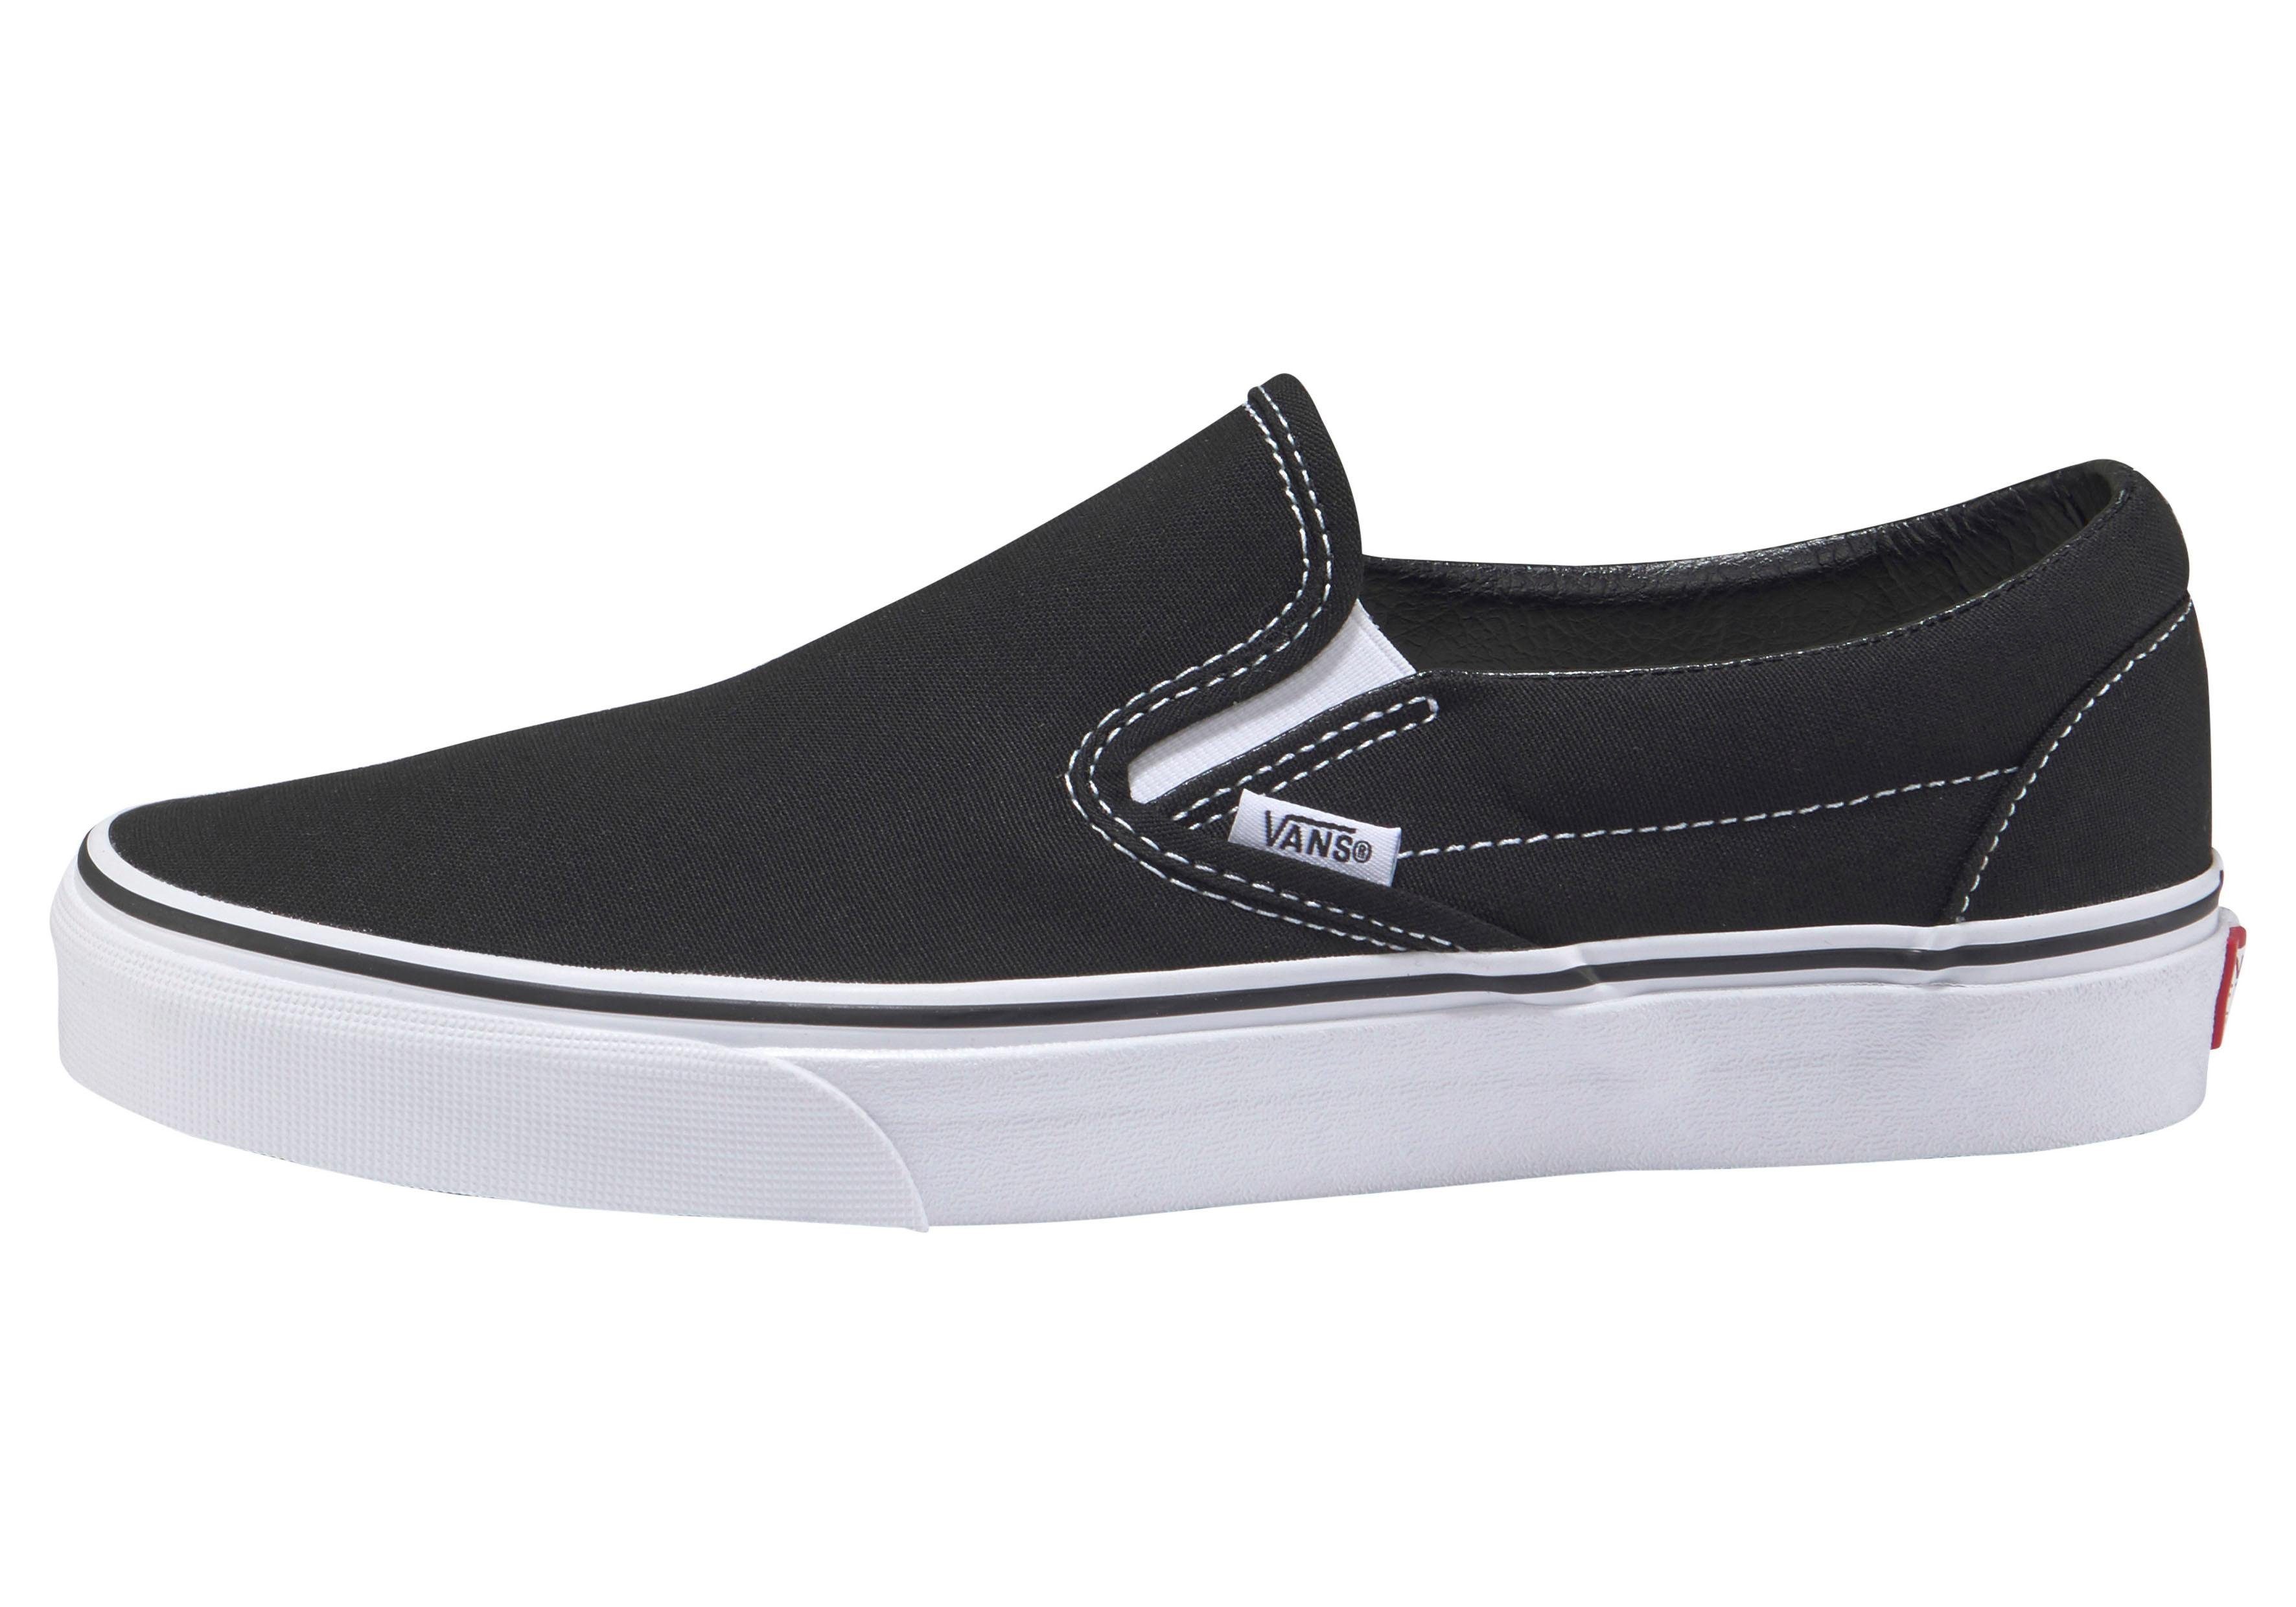 Vans »Classic Slip-On« Sneaker online kaufen | OTTO